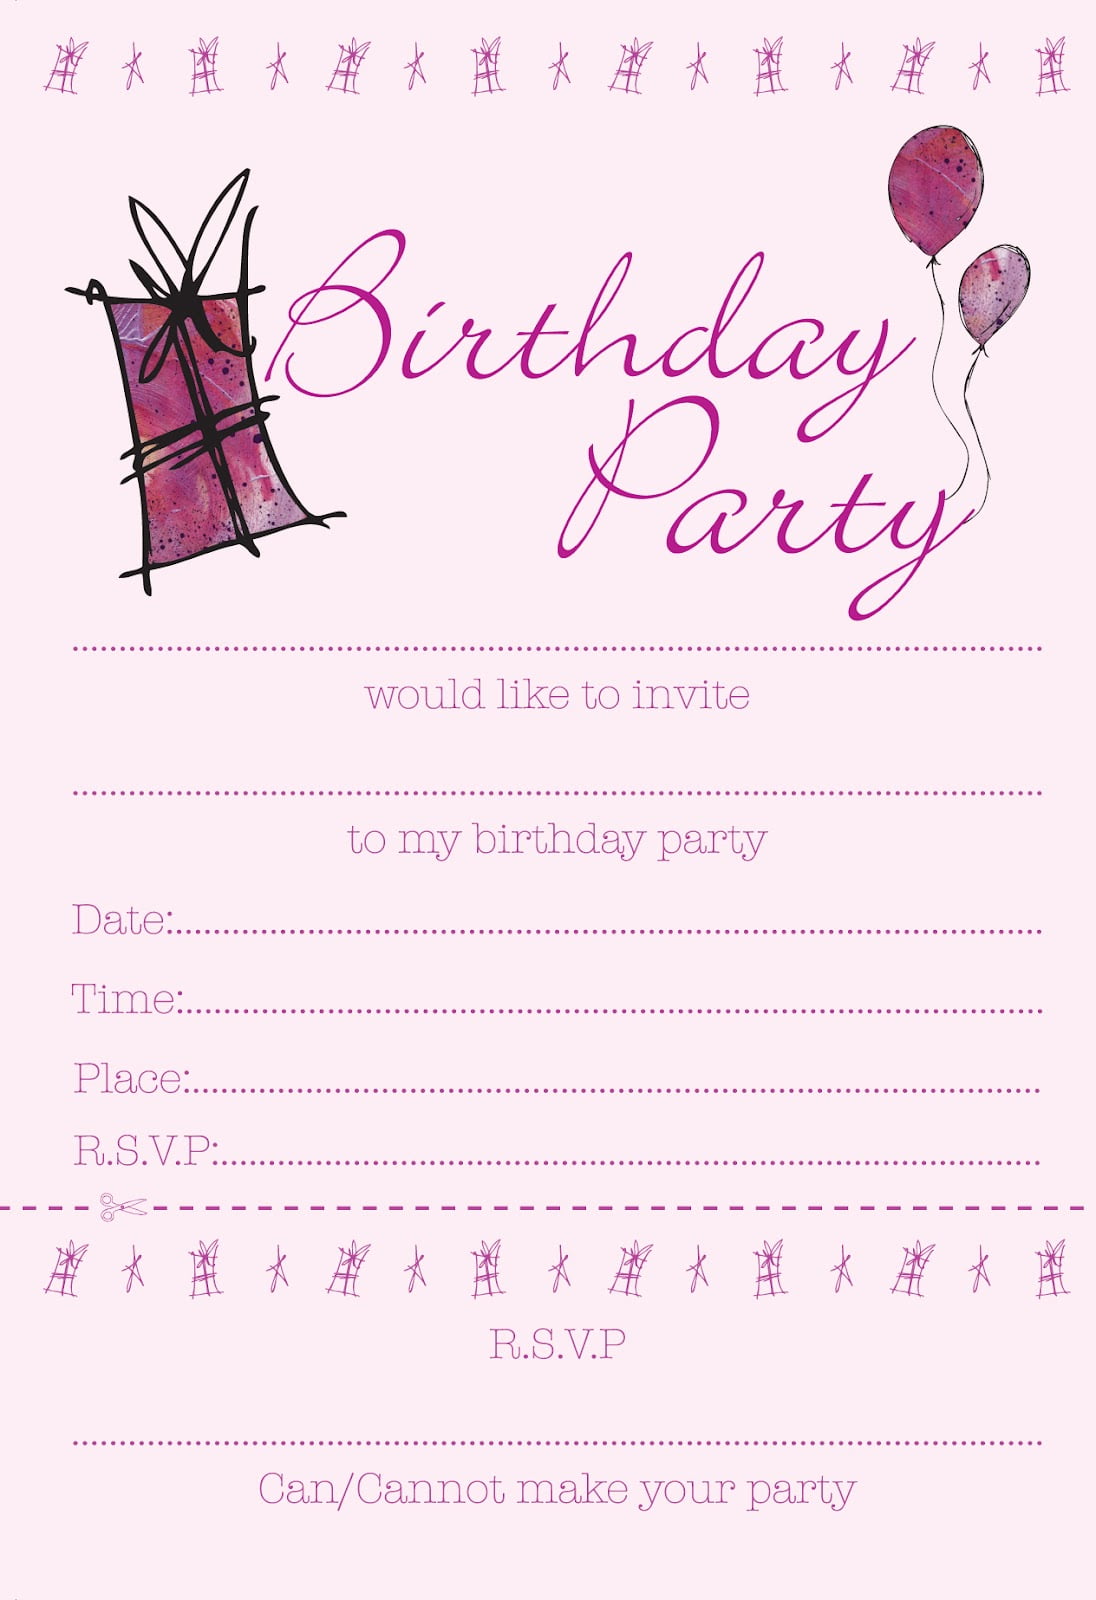 birthday-party-dots-free-birthday-invitation-template-greetings